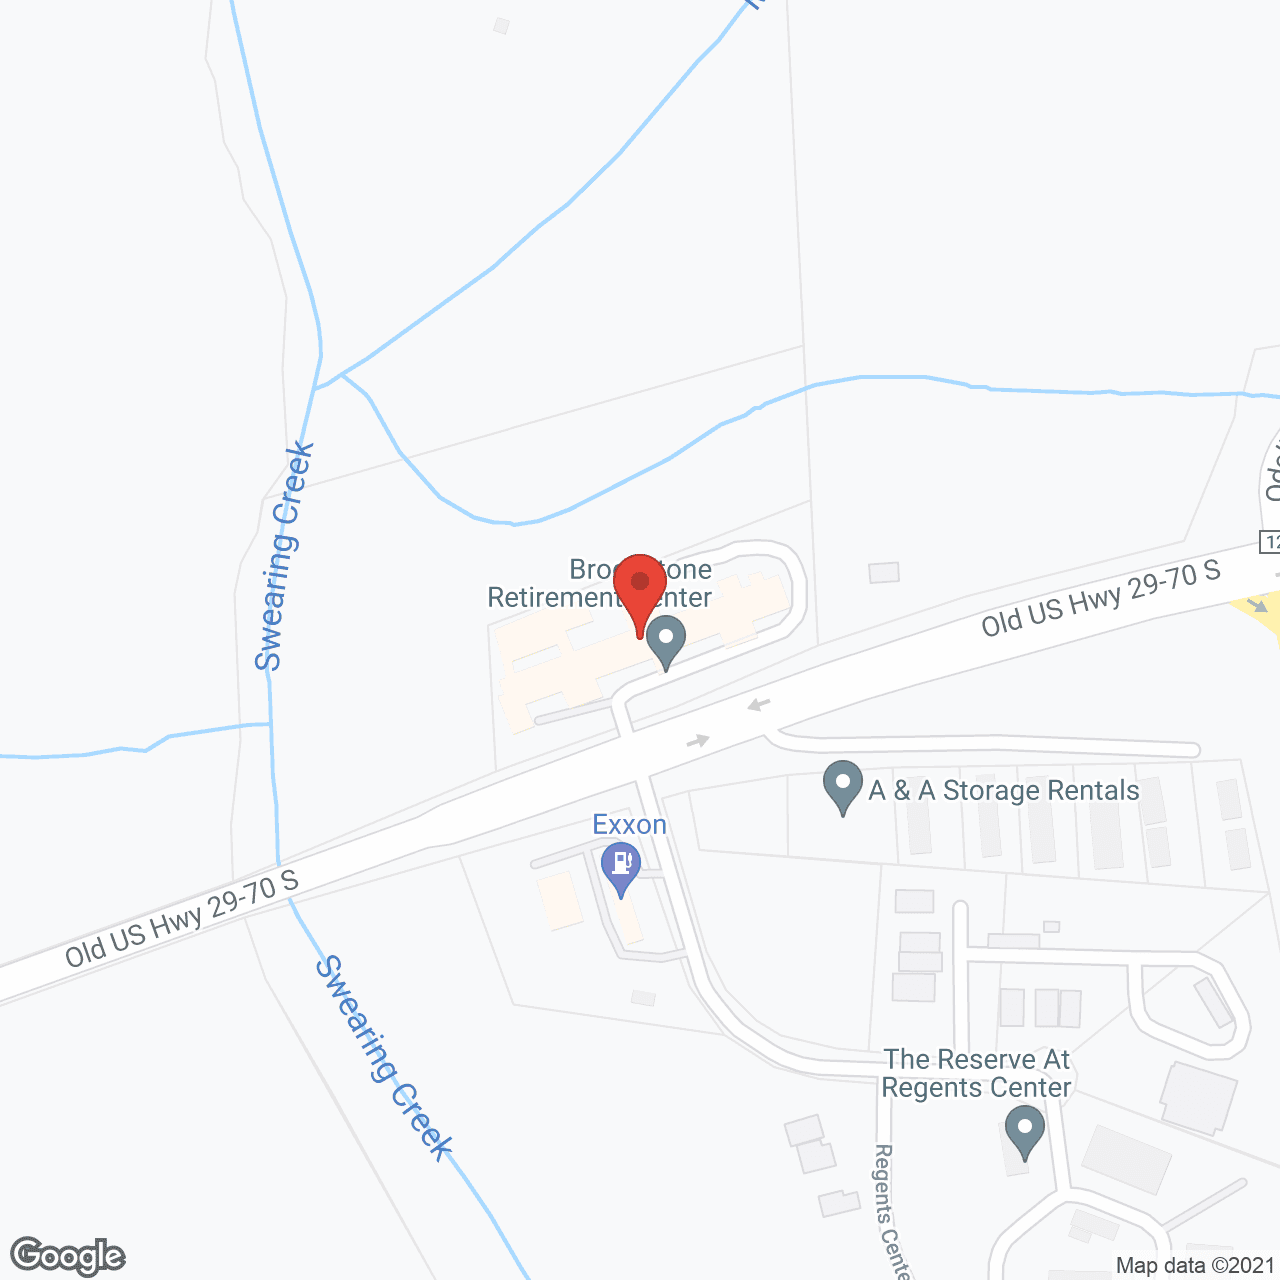 Brookstone Retirement Center, LLC in google map